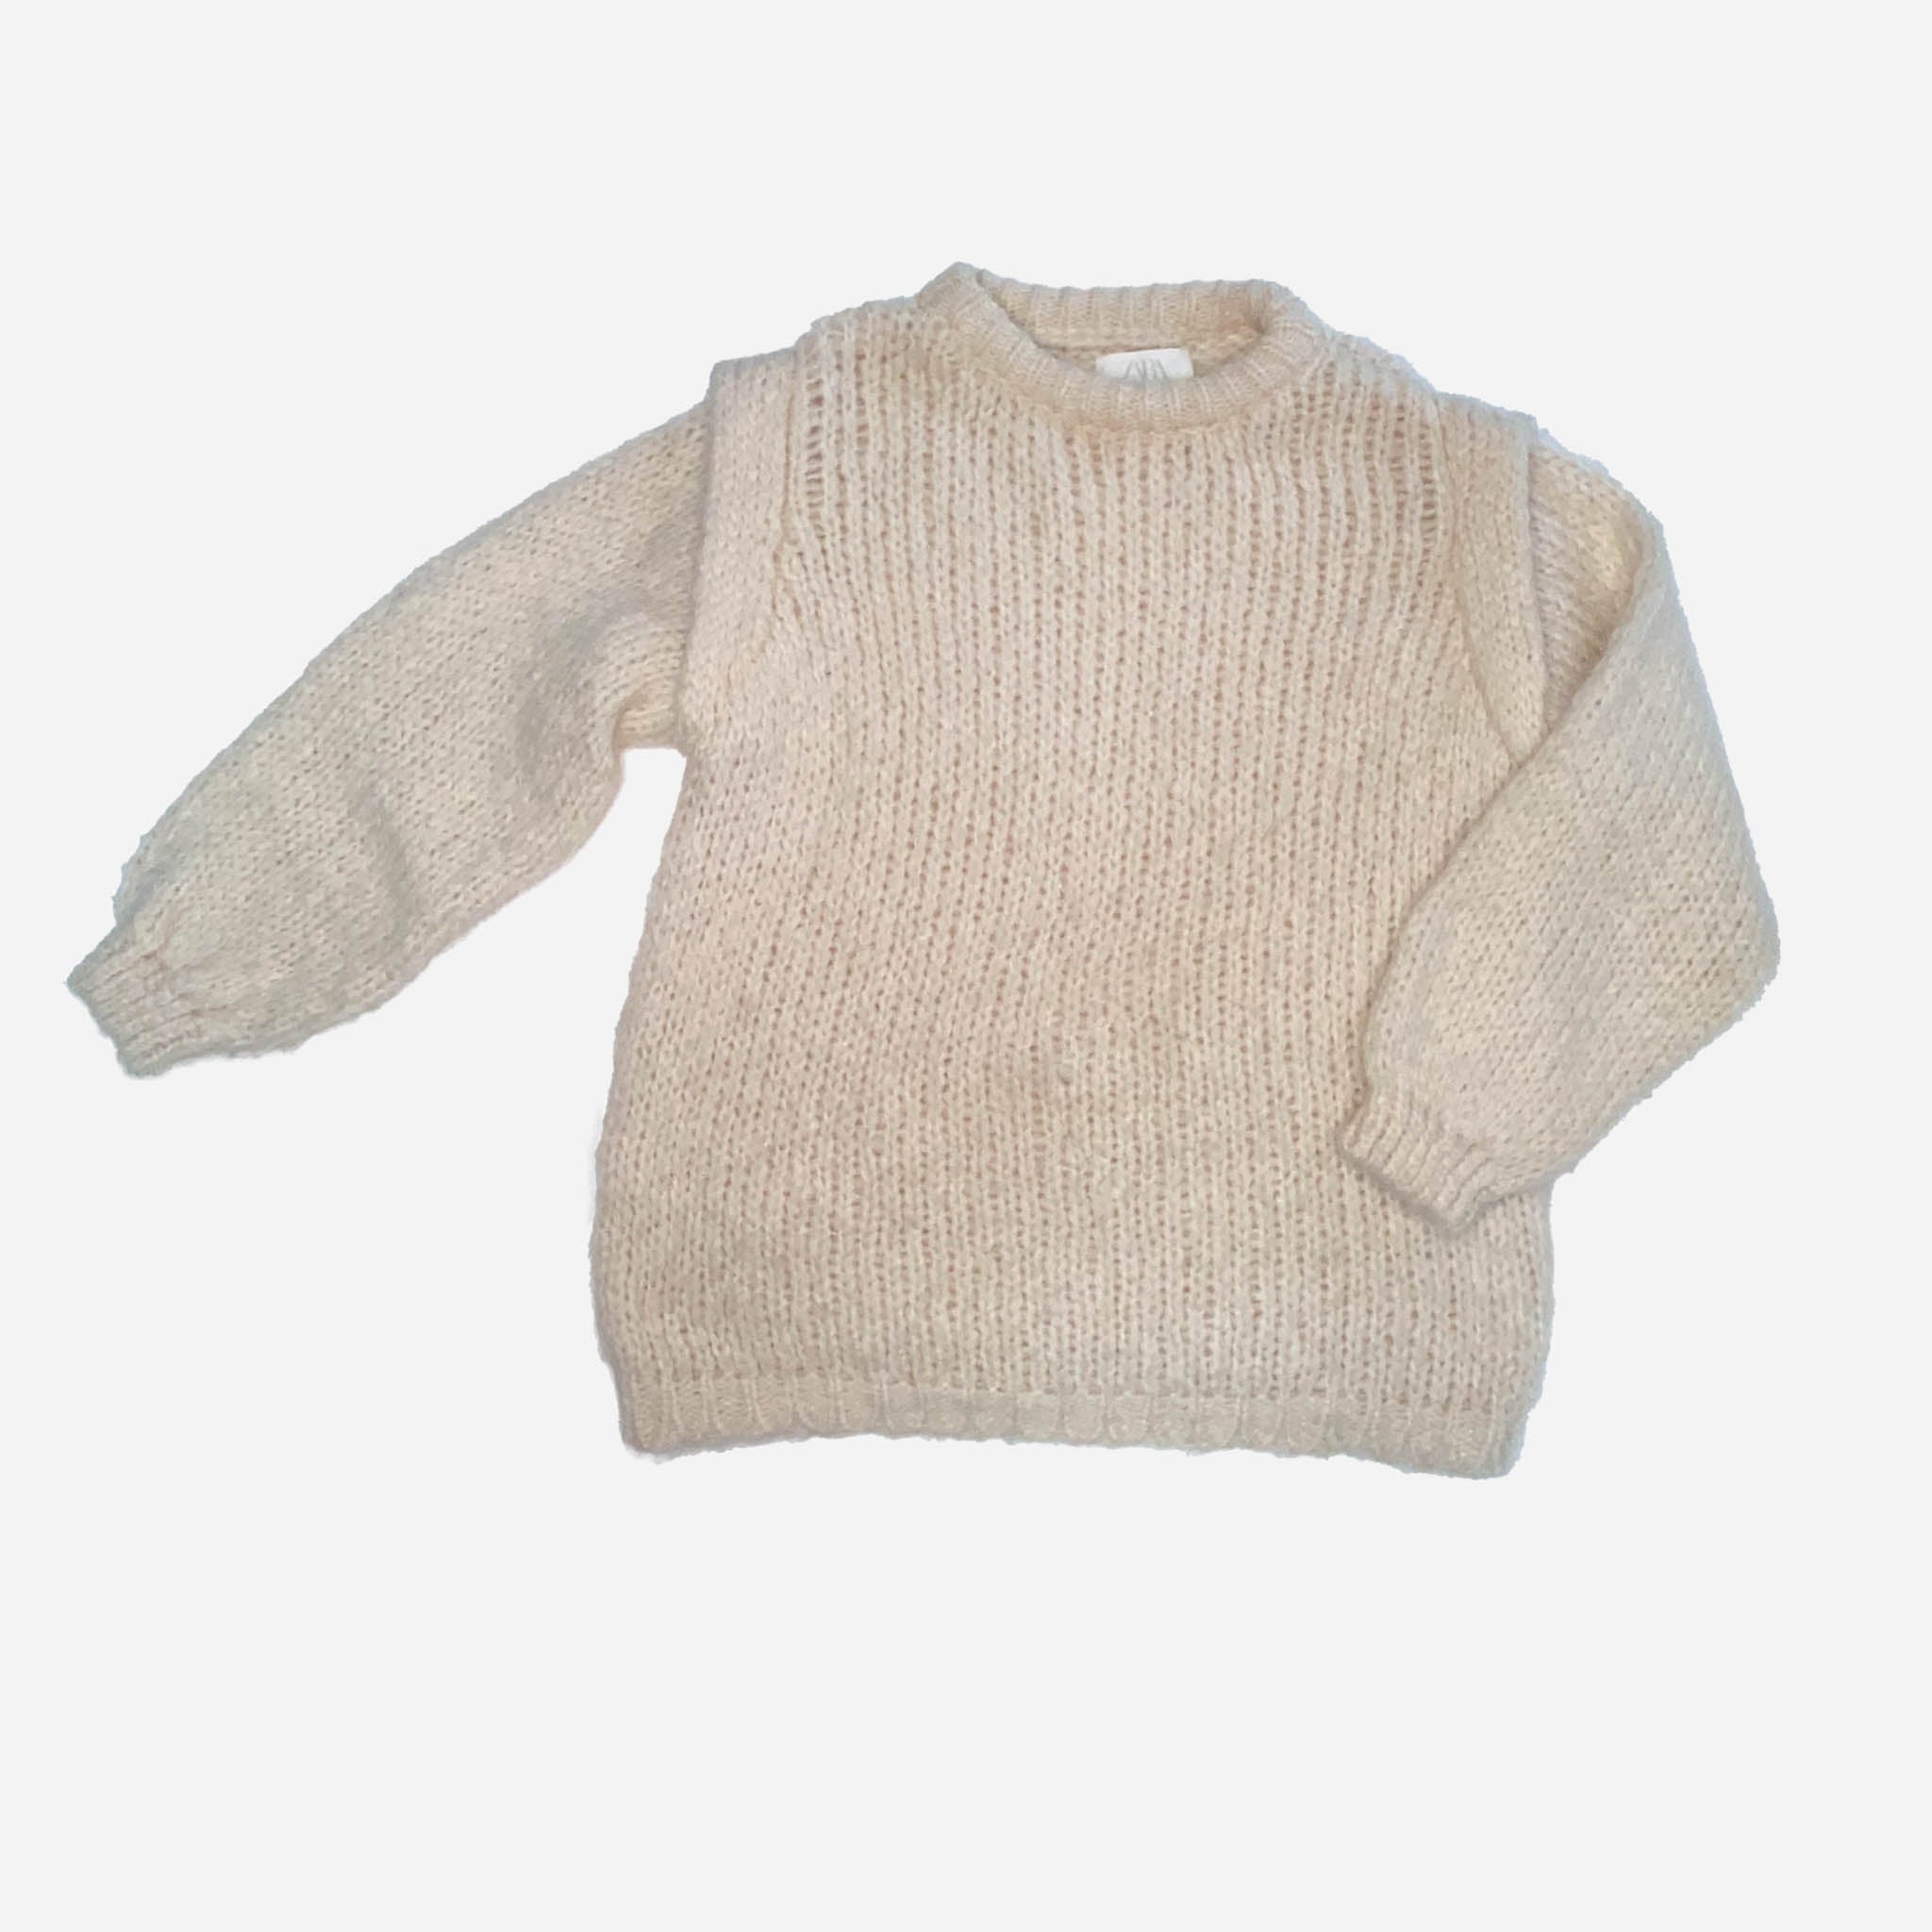 Knit Sweater - 11/12